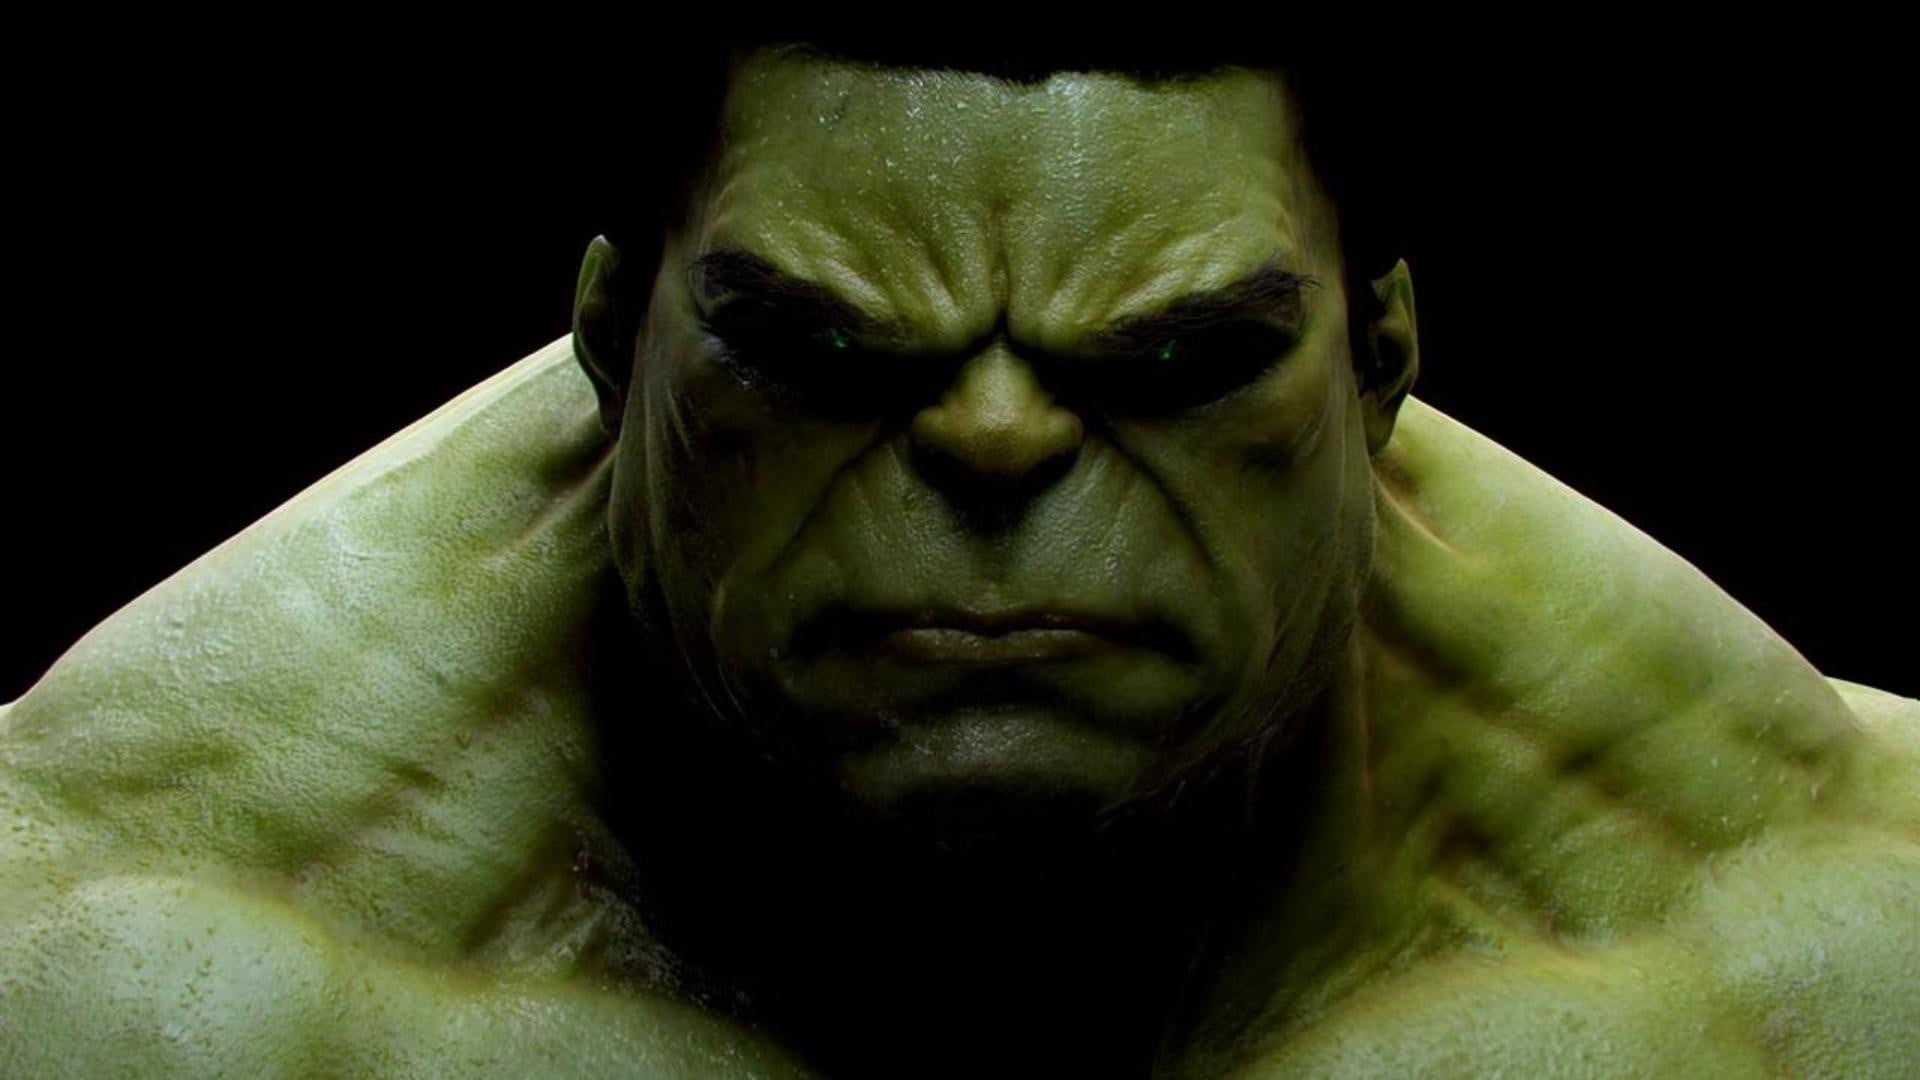 The Incredible Hulk, Marvel Comics, studio shot, one person, portrait